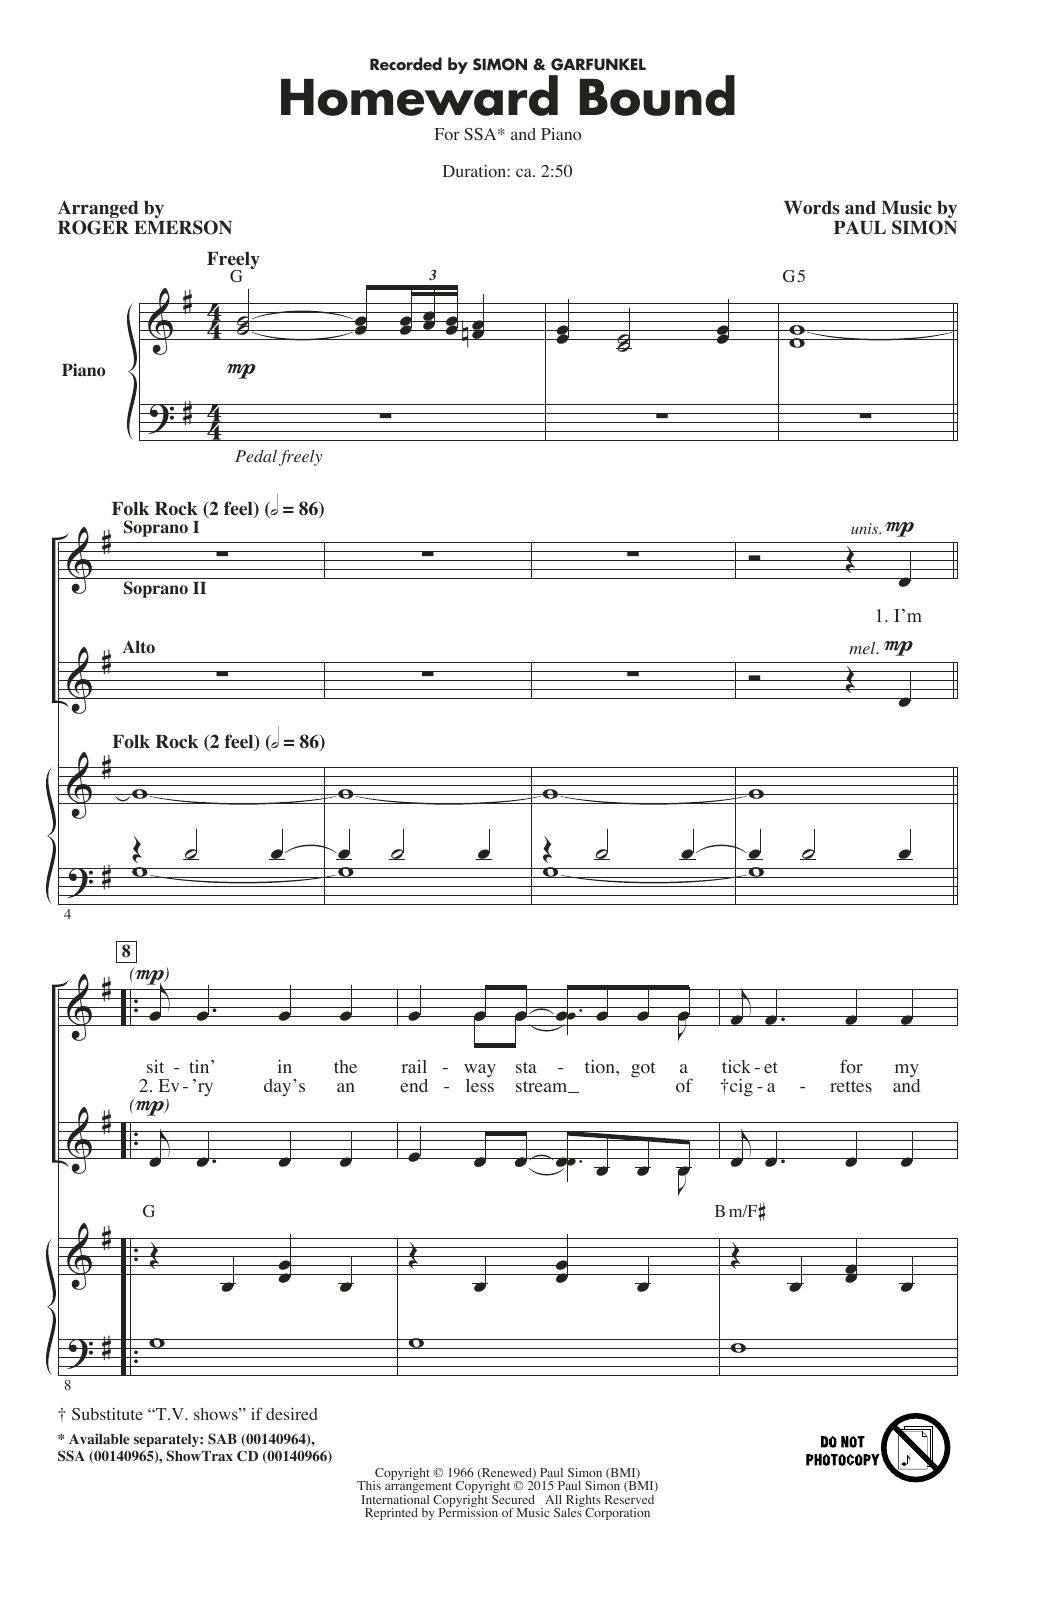 Simon & Garfunkel Homeward Bound (arr. Roger Emerson) Sheet Music Notes & Chords for SSA - Download or Print PDF